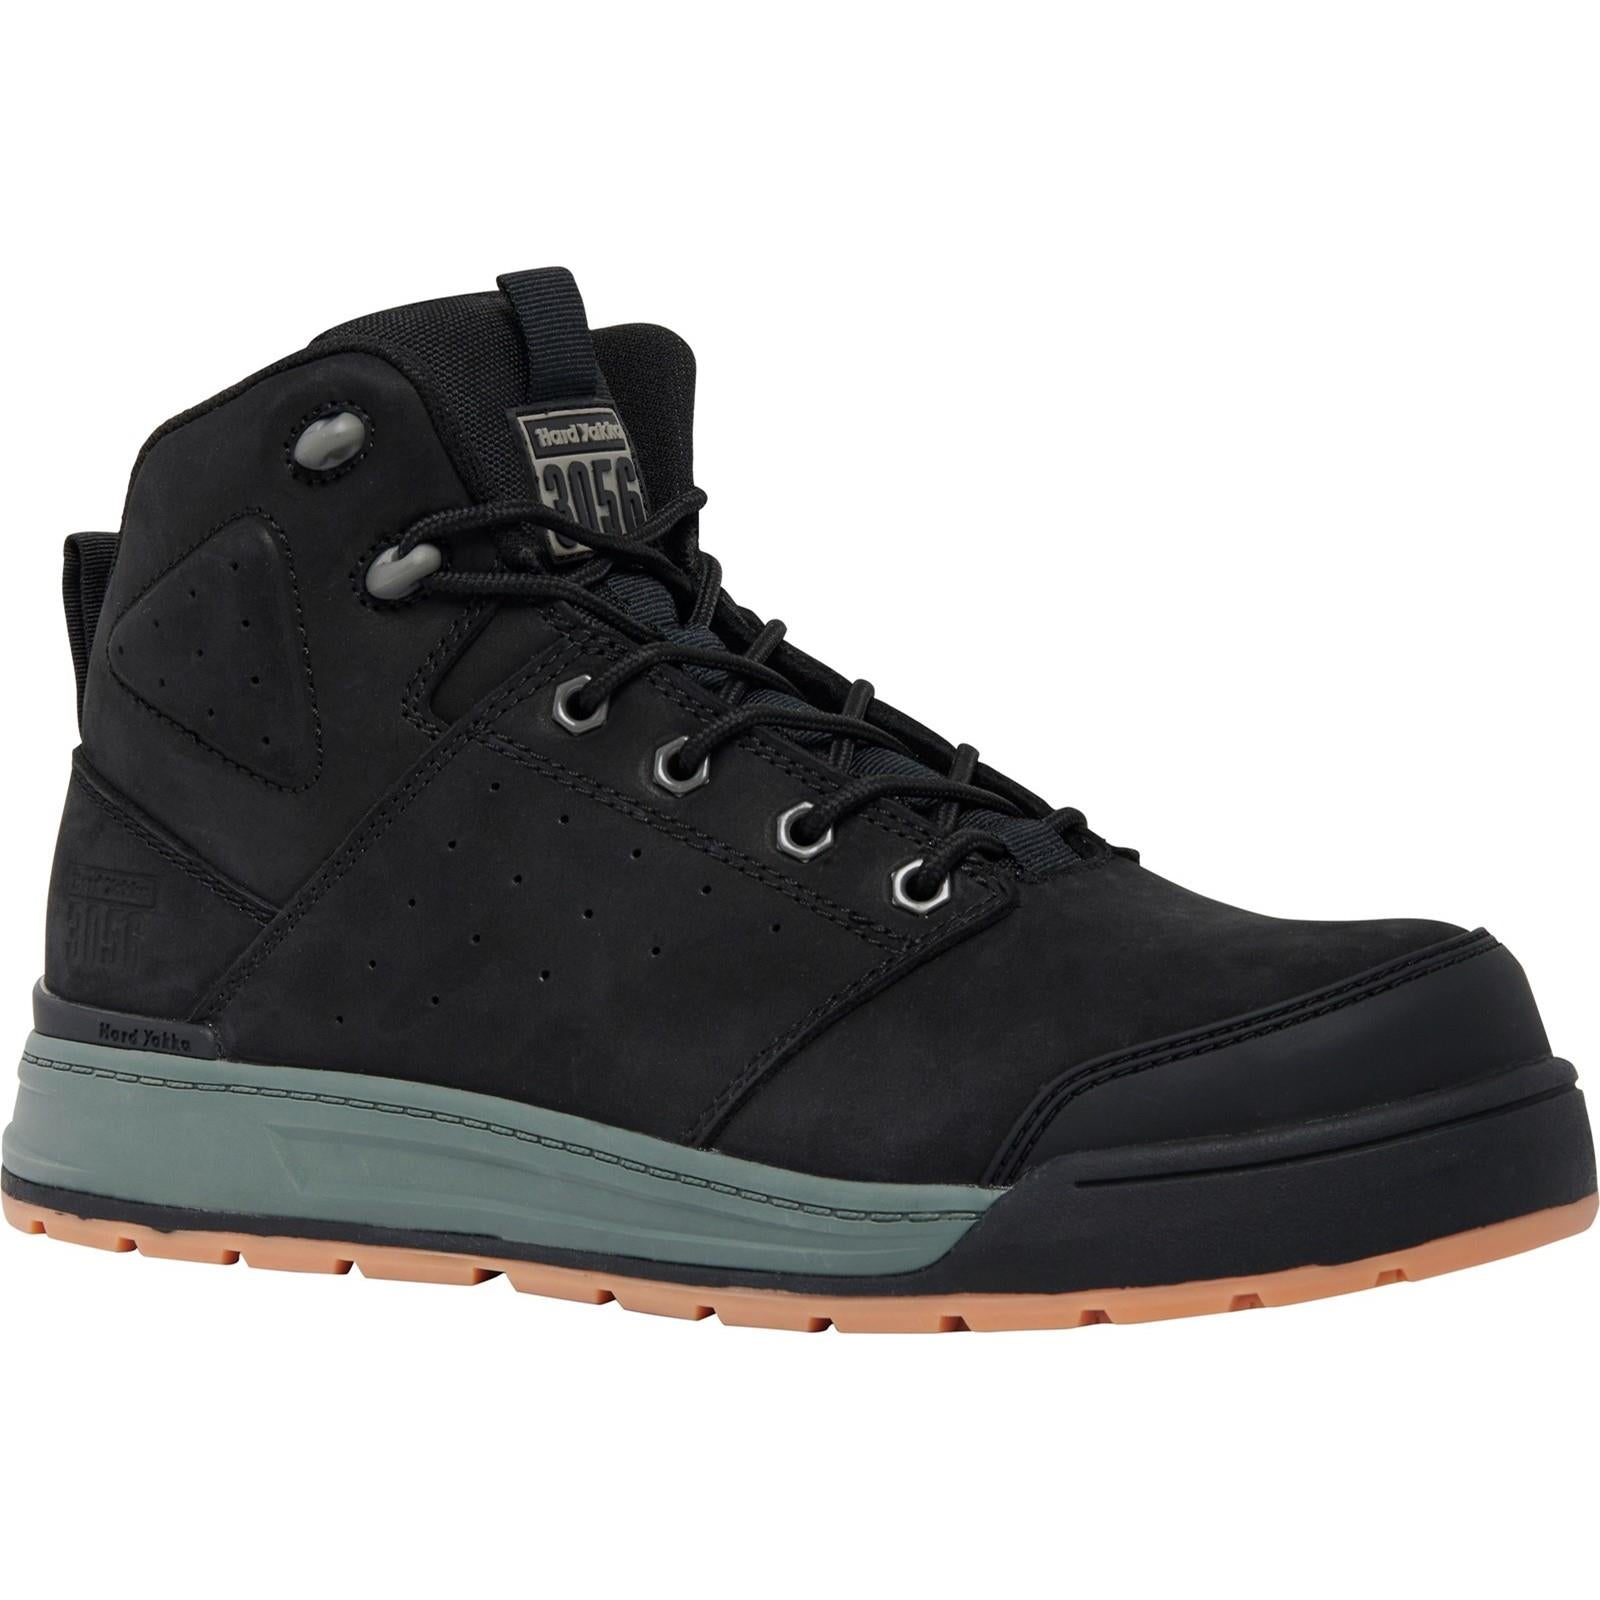 Hard Yakka 3056 black leather composite toe/midsole lace/zip safety work boot